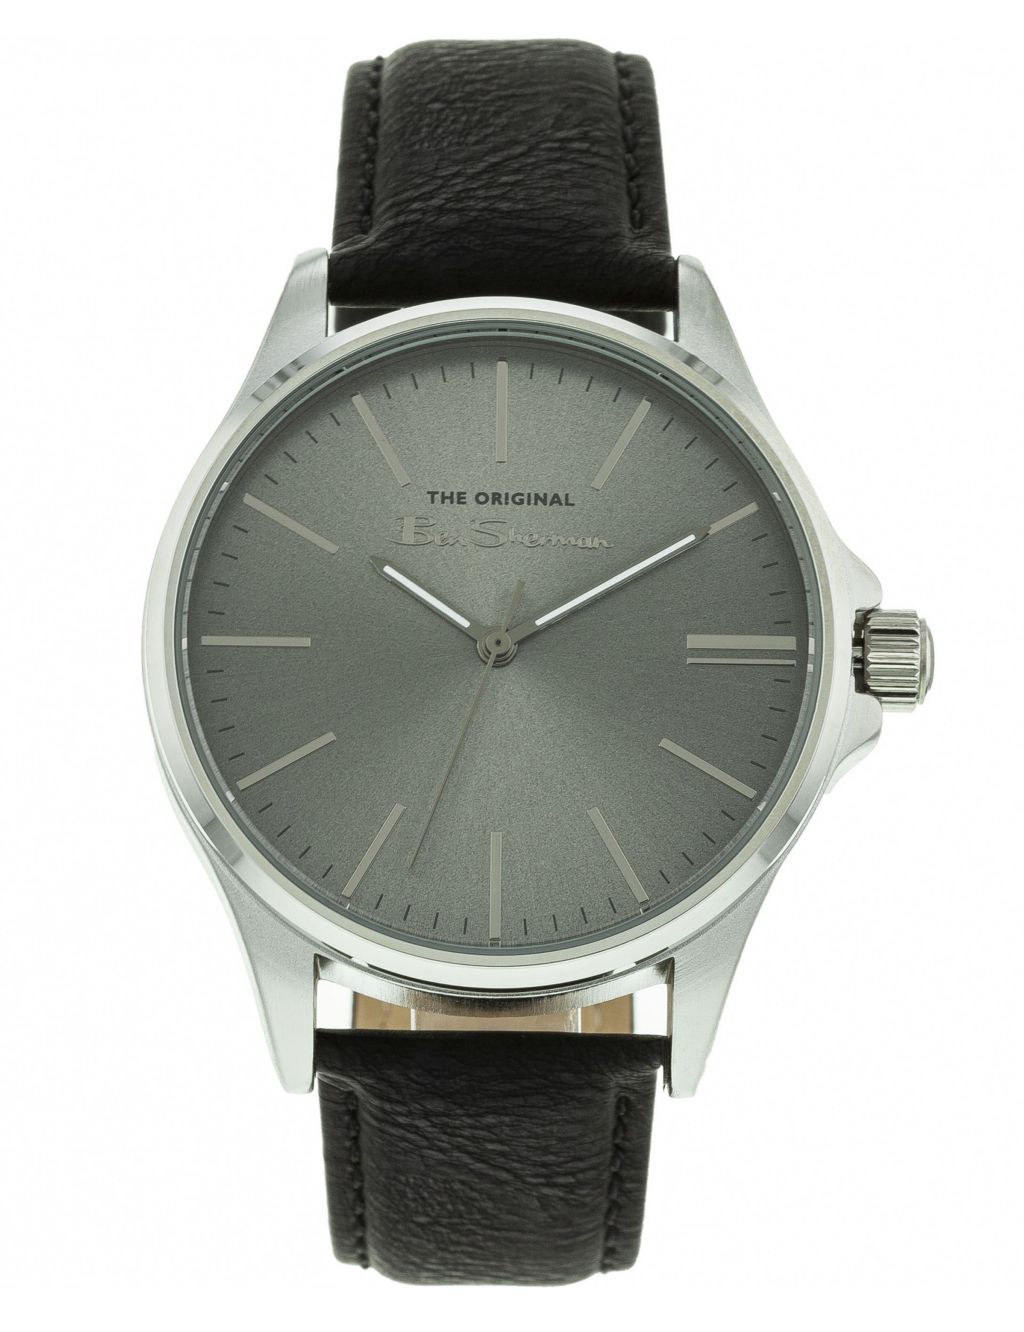 Ben Sherman Black Leather Quartz Watch image 1